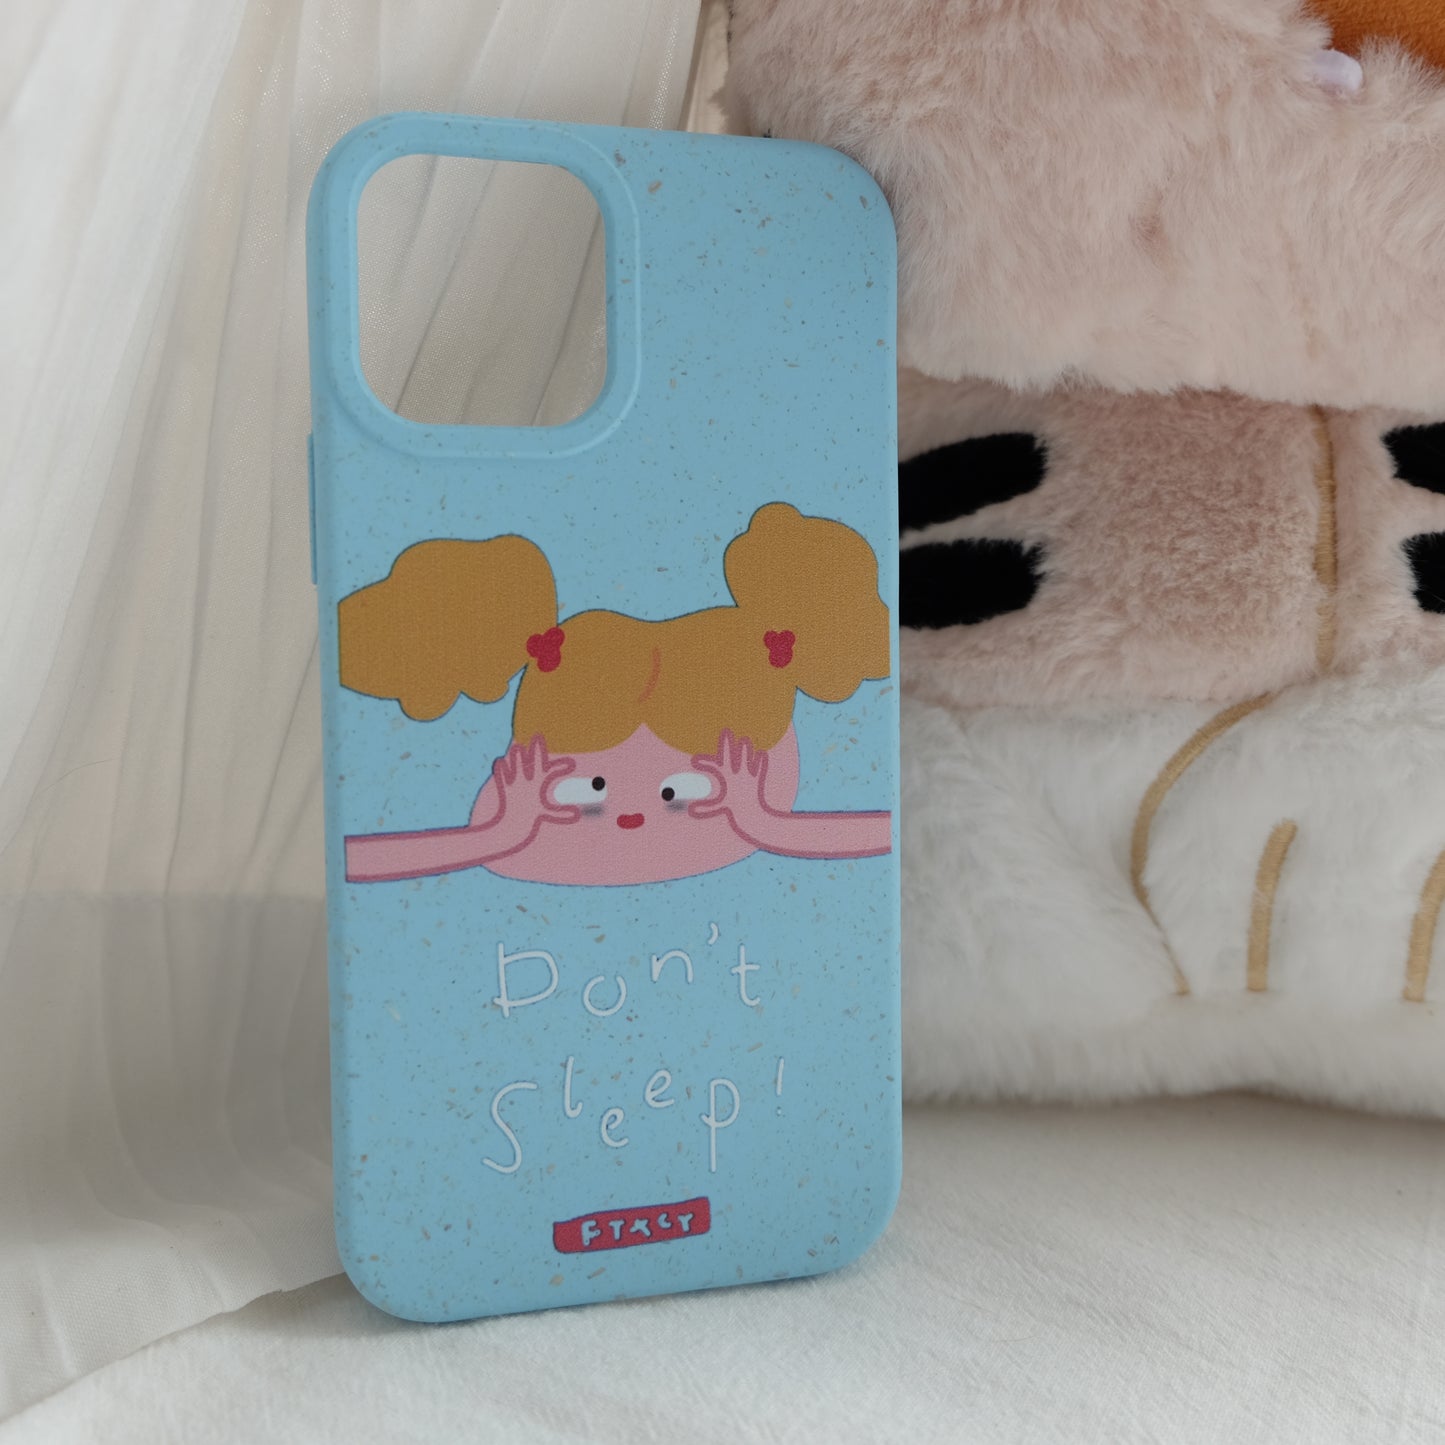 Don't sleep funny girl degradable phone case